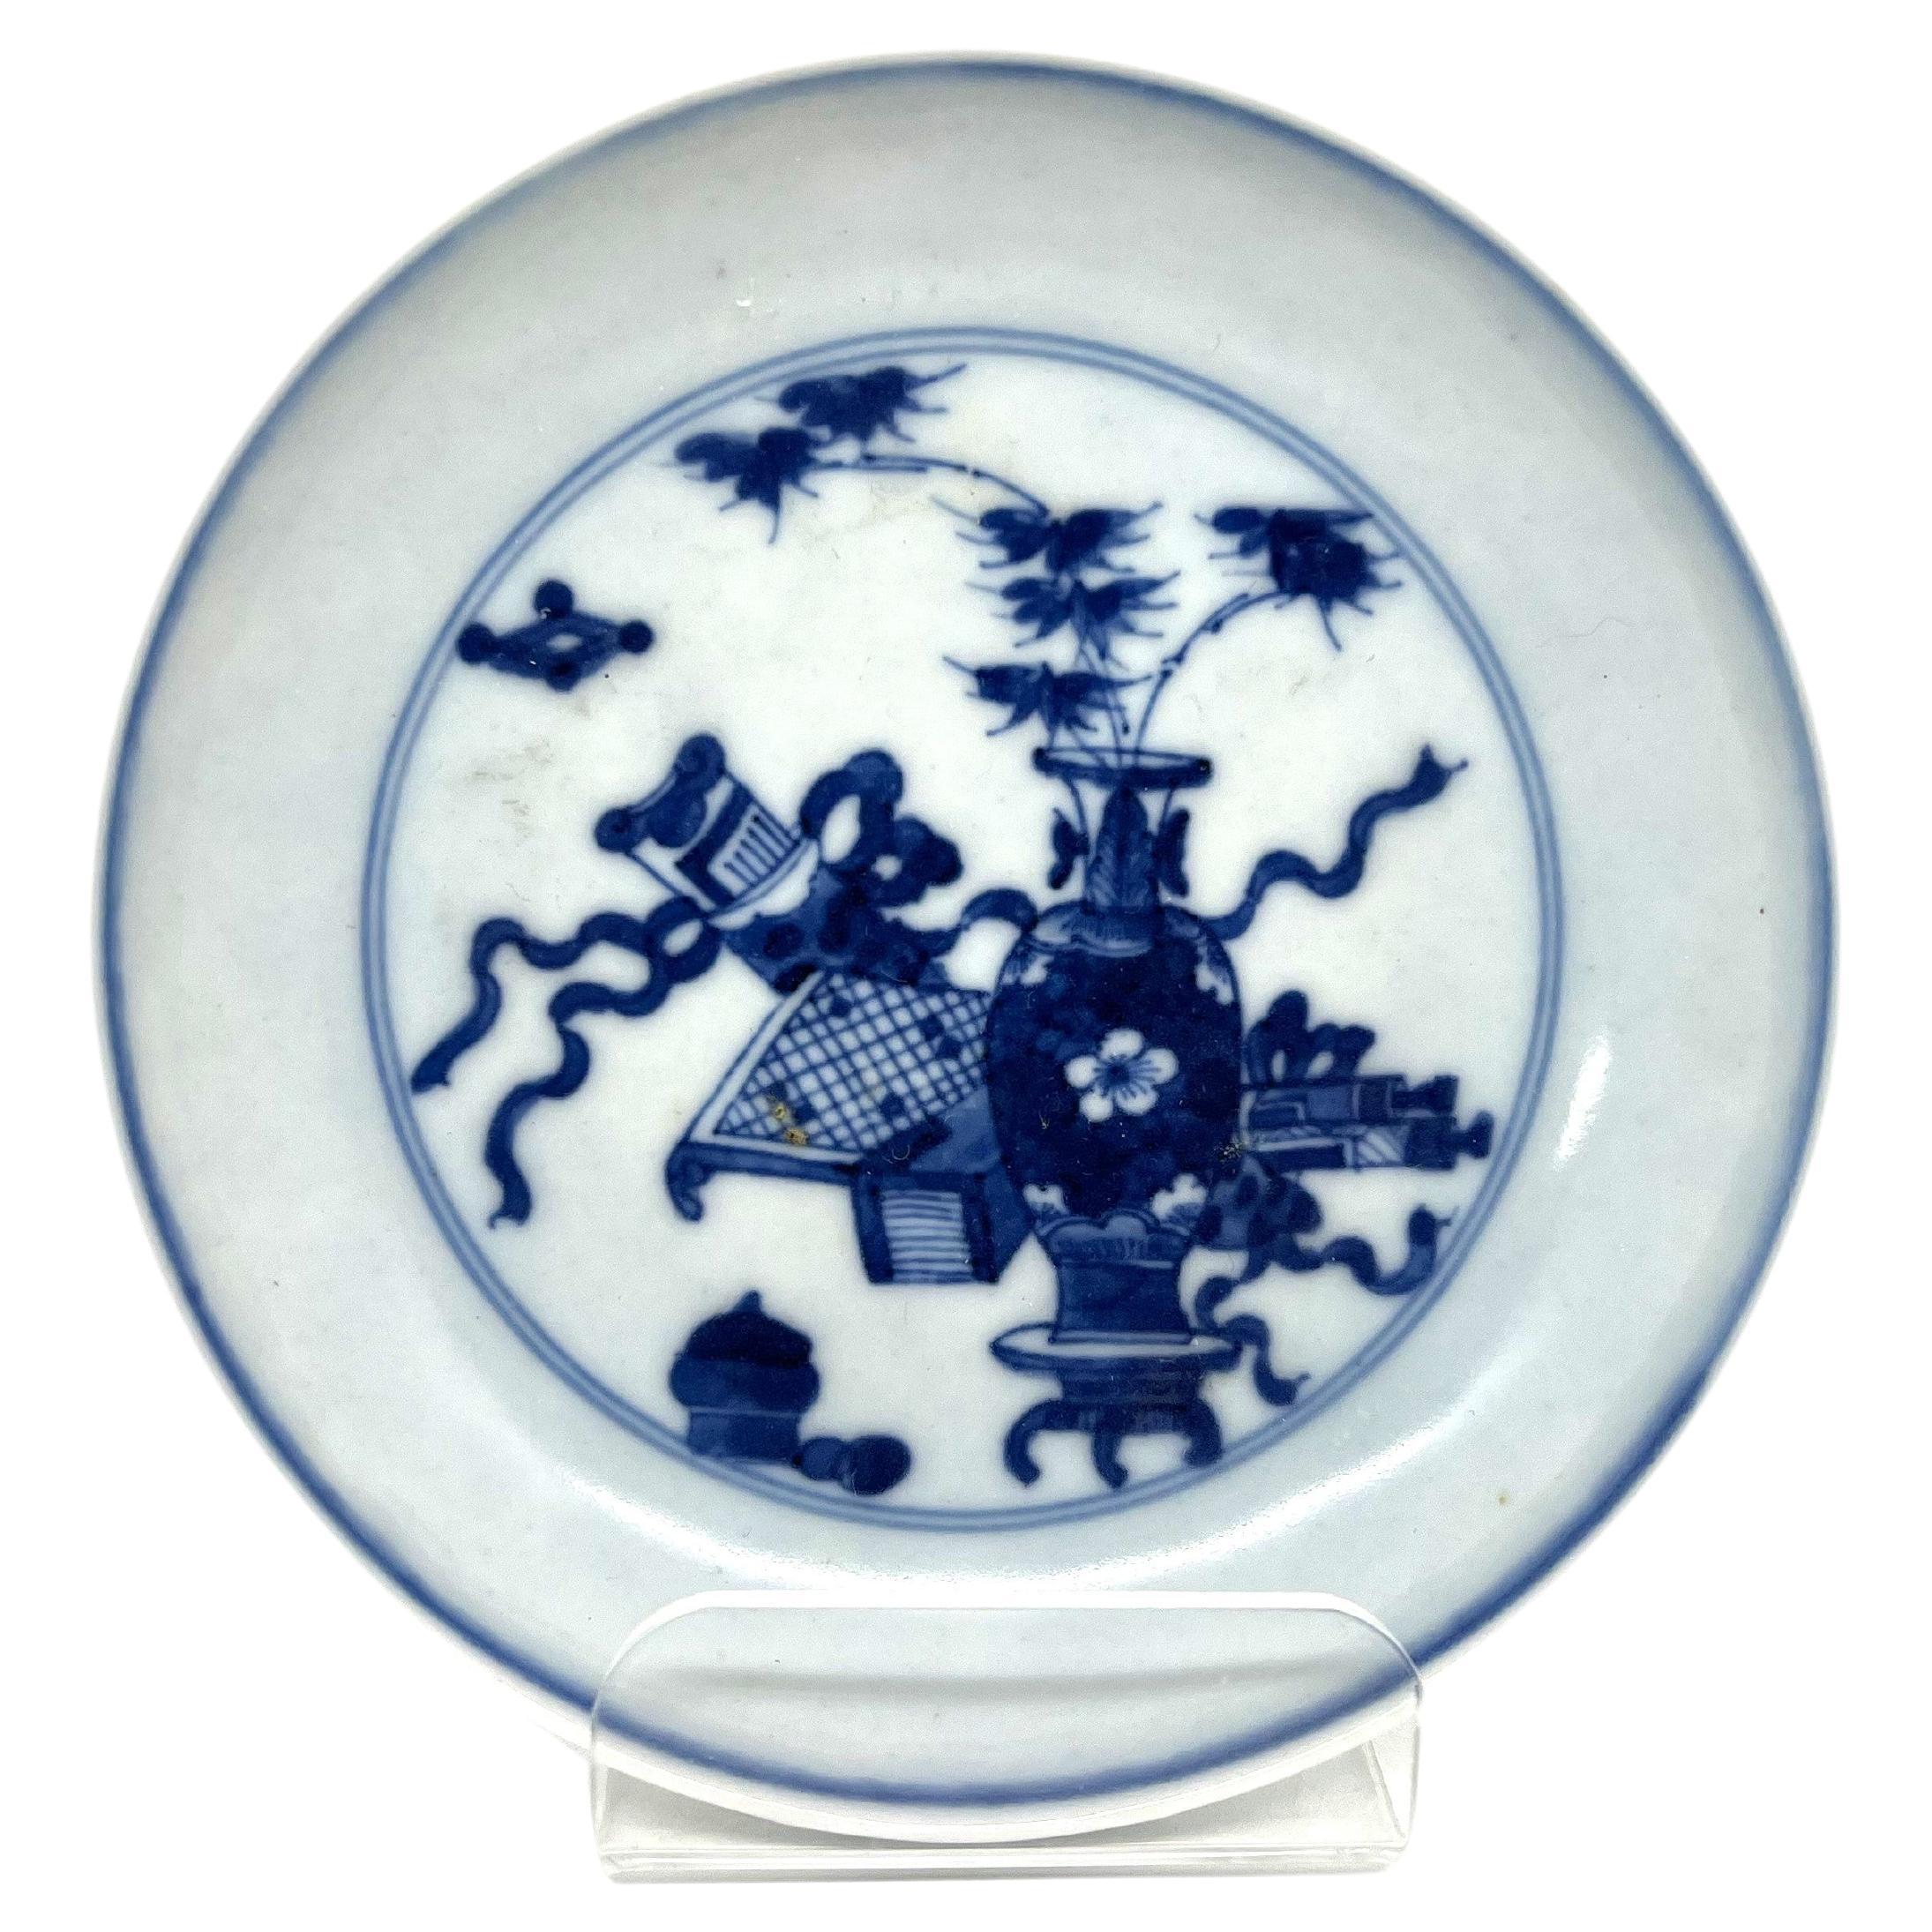 Artefacts of the Literati Pattern Plate c 1725, Qing Dynasty, Yongzheng Era